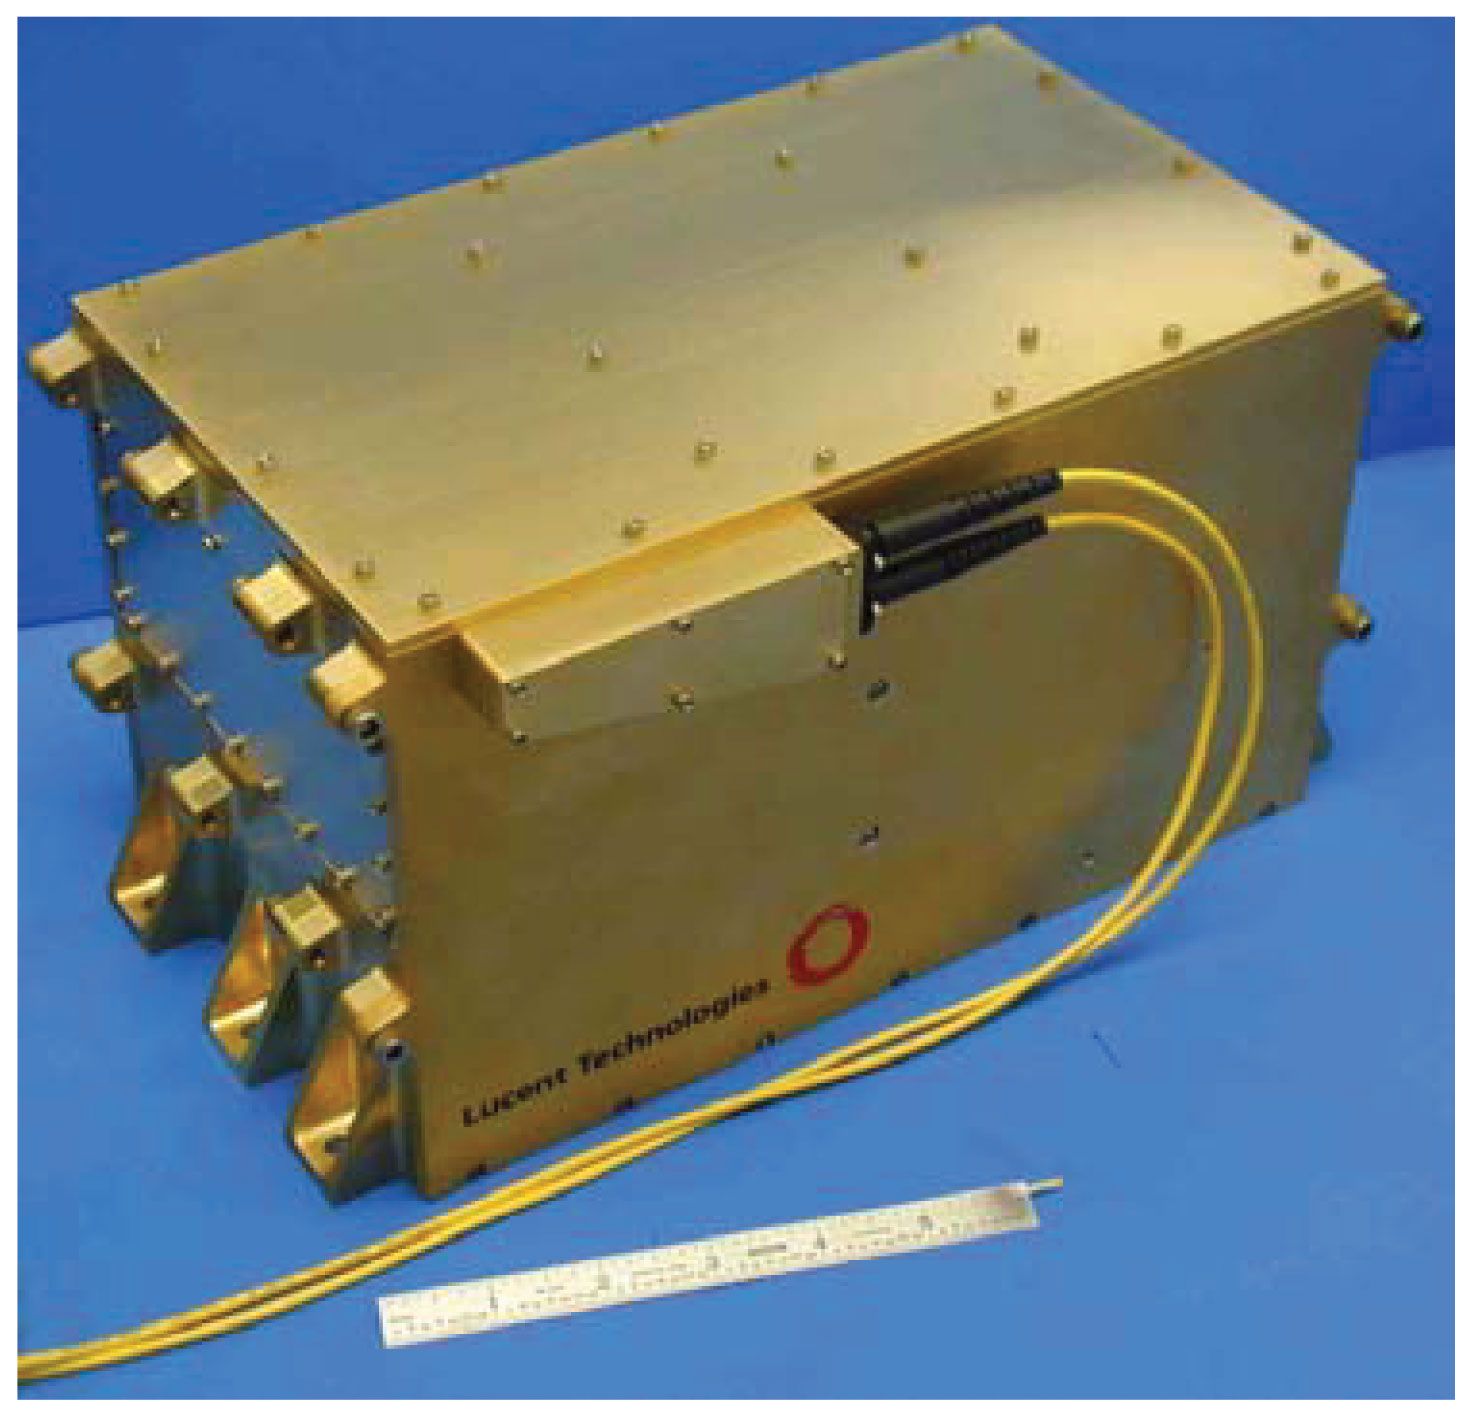 Lucent 10 W space-qualified erbium fiber amplifier.